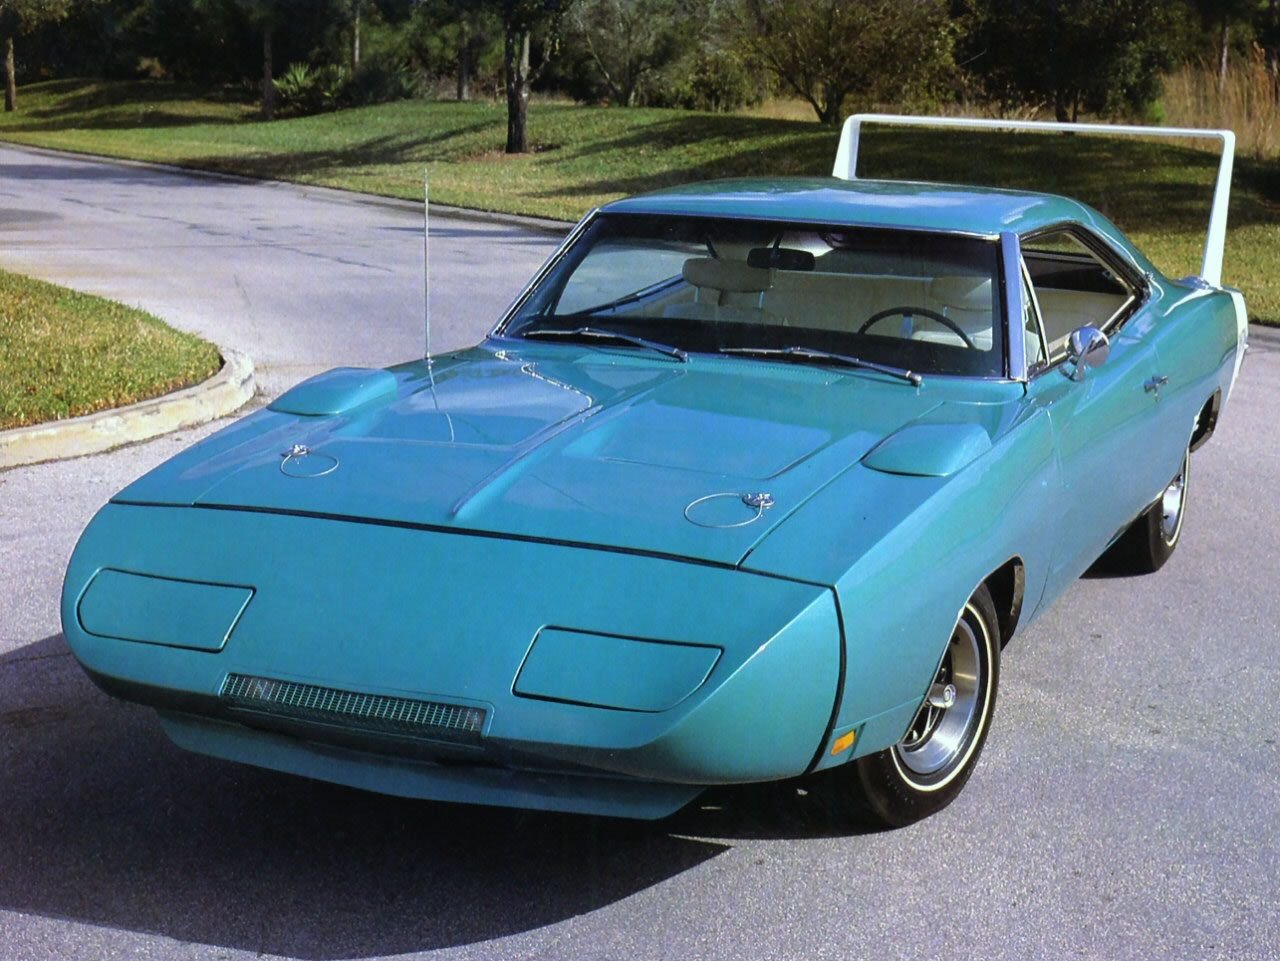 Додж сколько лошадей. Dodge Daytona 1969. Dodge Charger Daytona 1969. Плимут Дайтона 1969. Plymouth Daytona 1969.